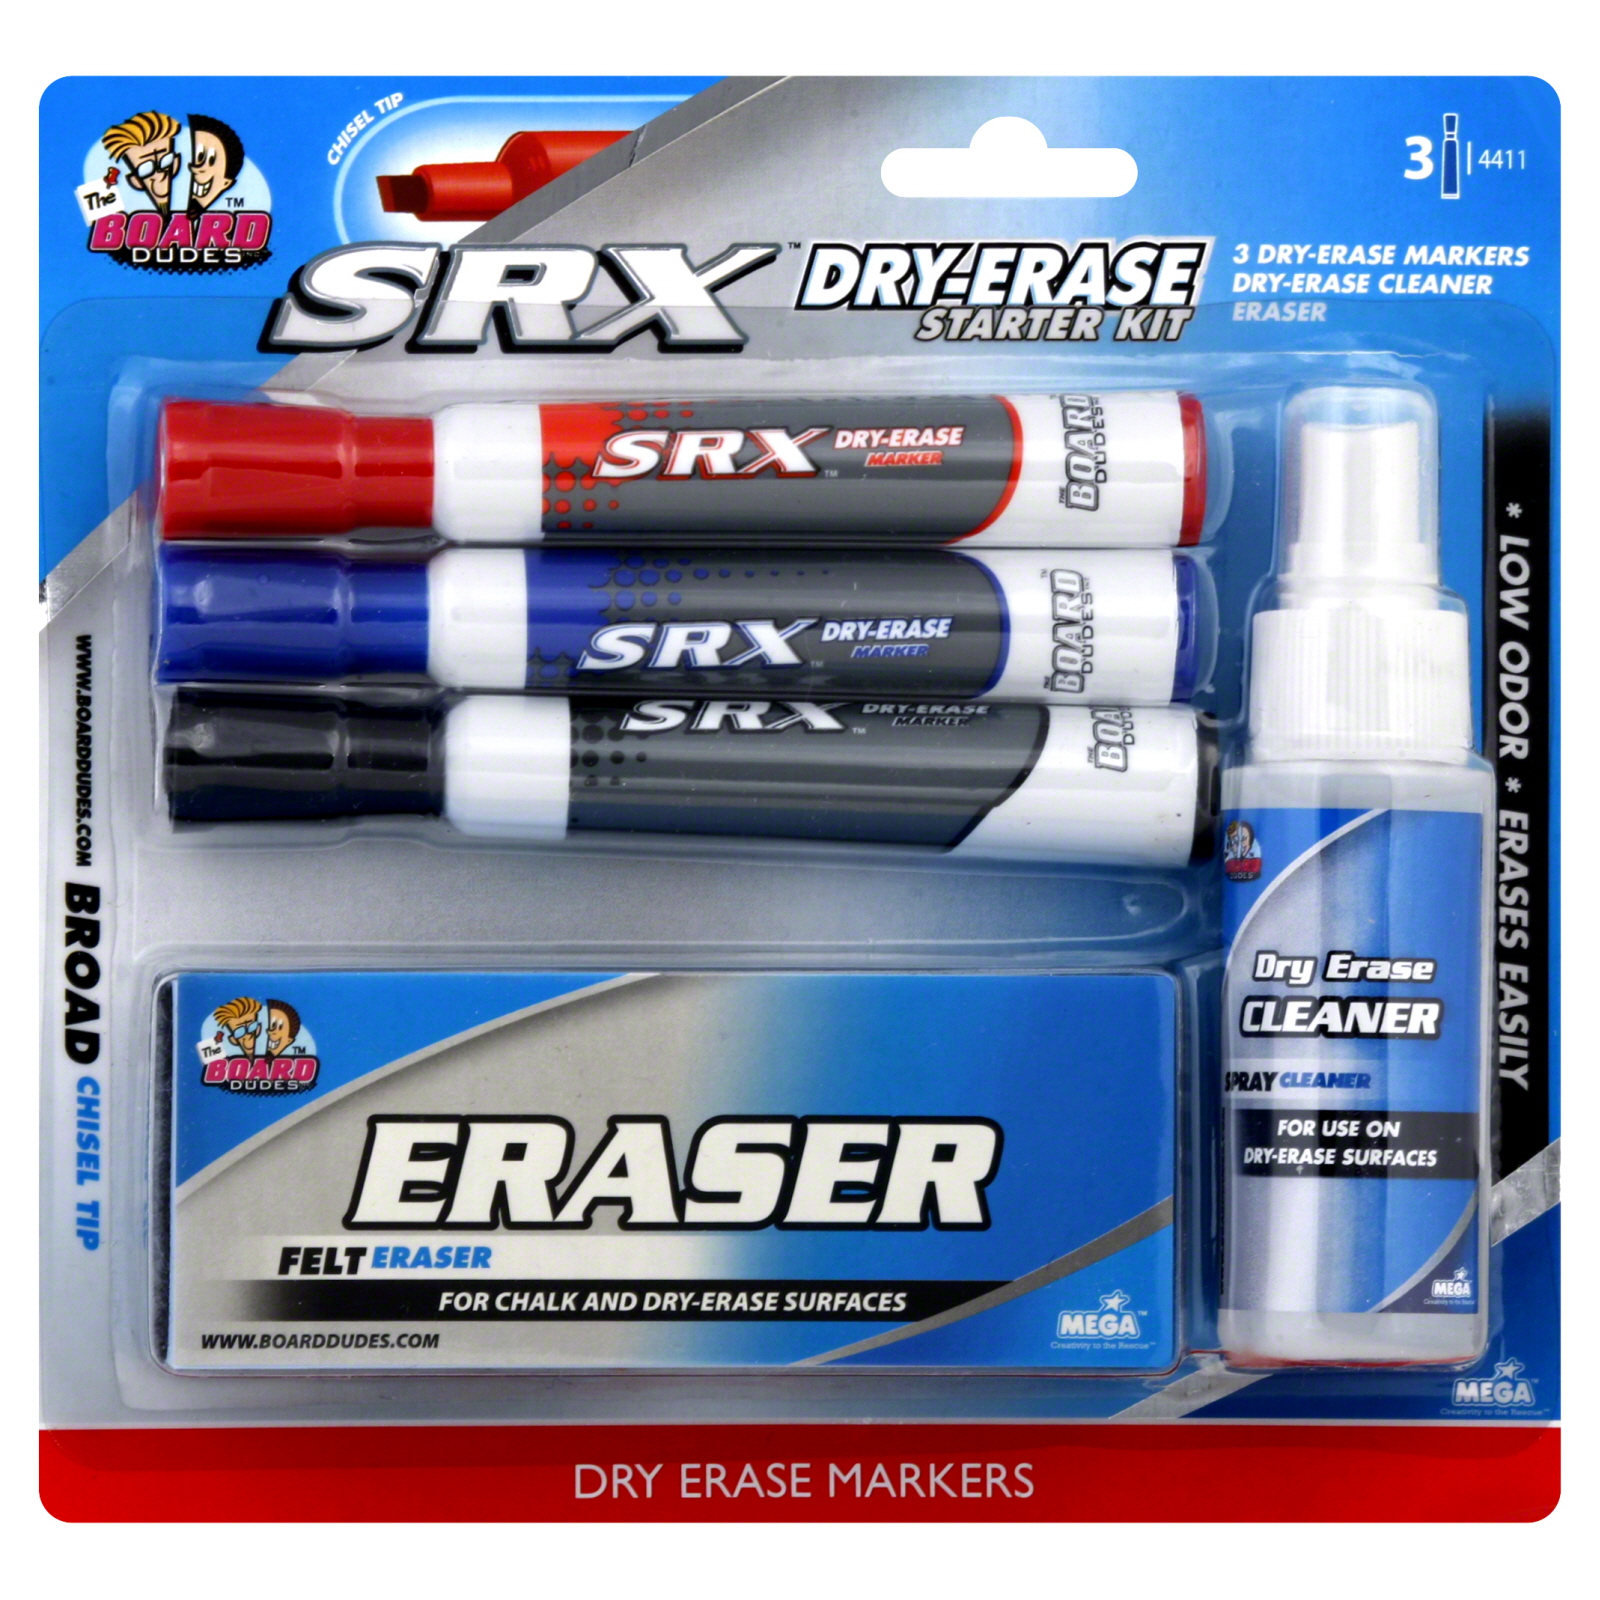 4411 The Board Dudes SRX Dry-Erase Starter Kit, 1 kit